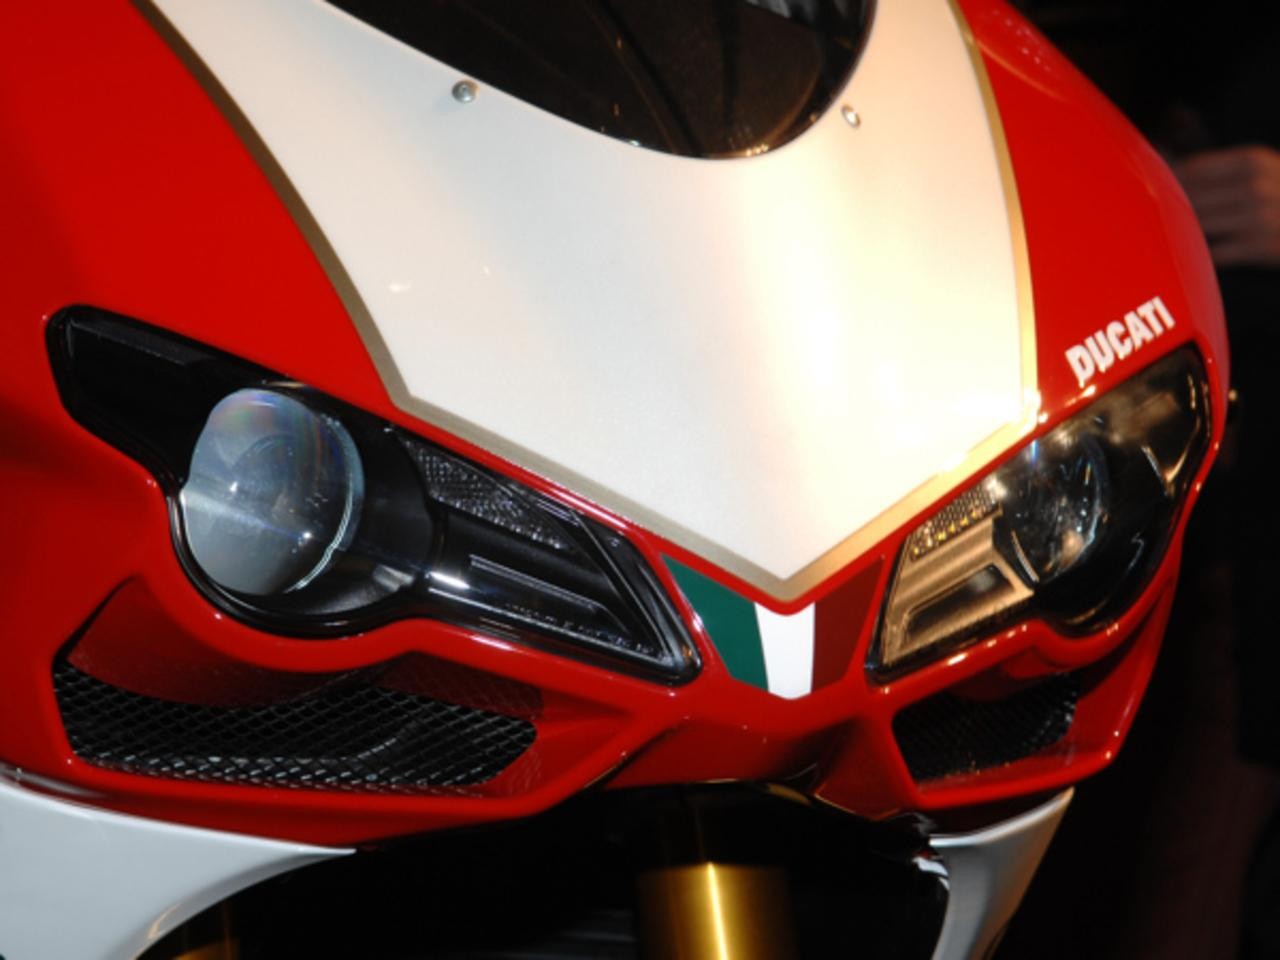 General 1280x960 Ducati motorcycle vehicle Red Motorcycles closeup Volkswagen Group Italian motorcycles